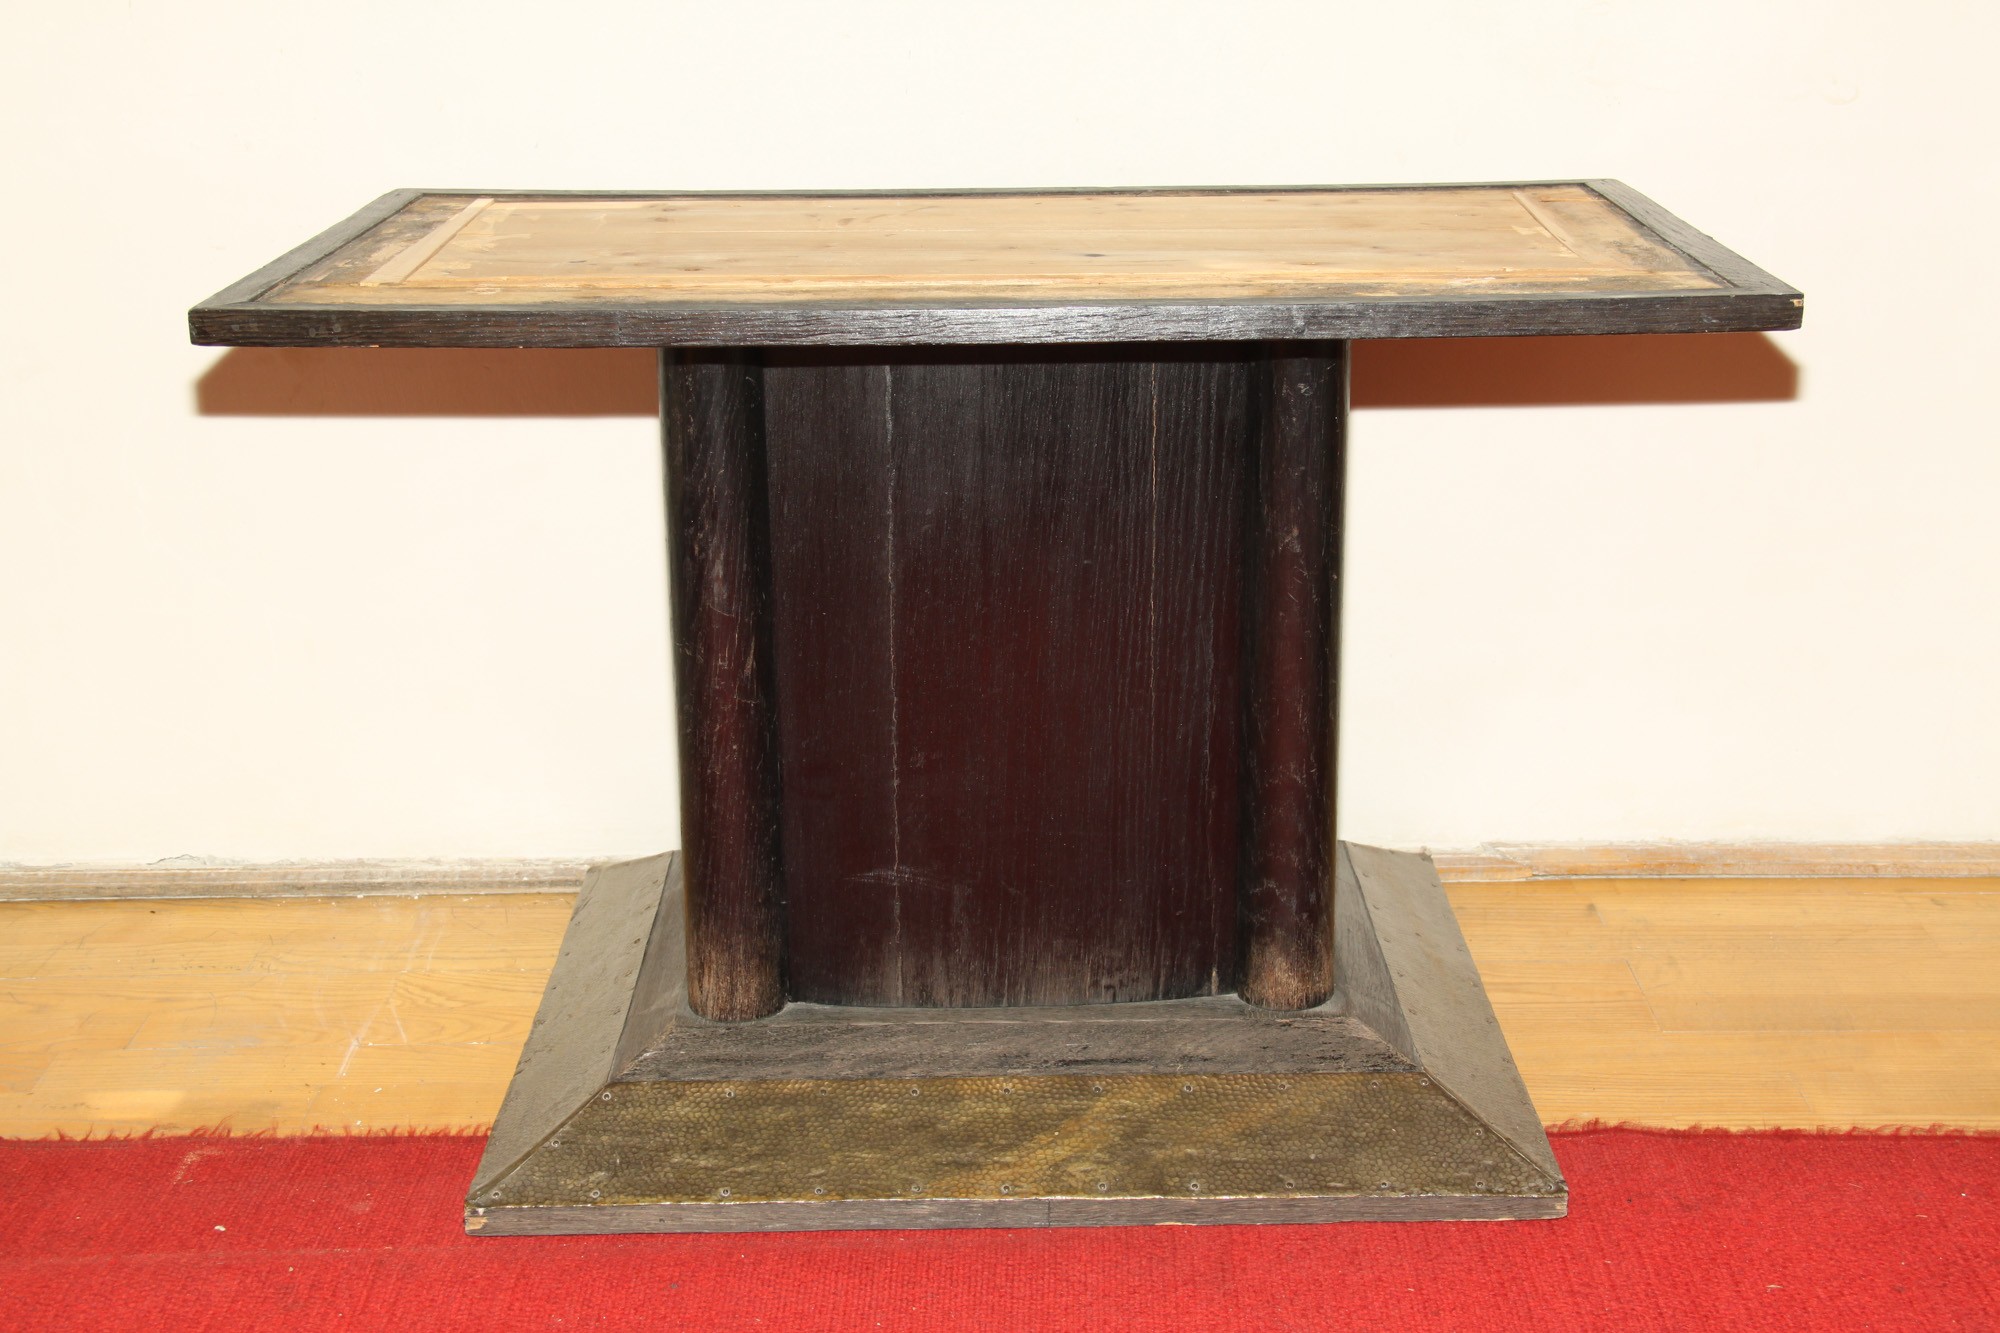 Asztal (Rippl-Rónai Múzeum CC BY-NC-SA)